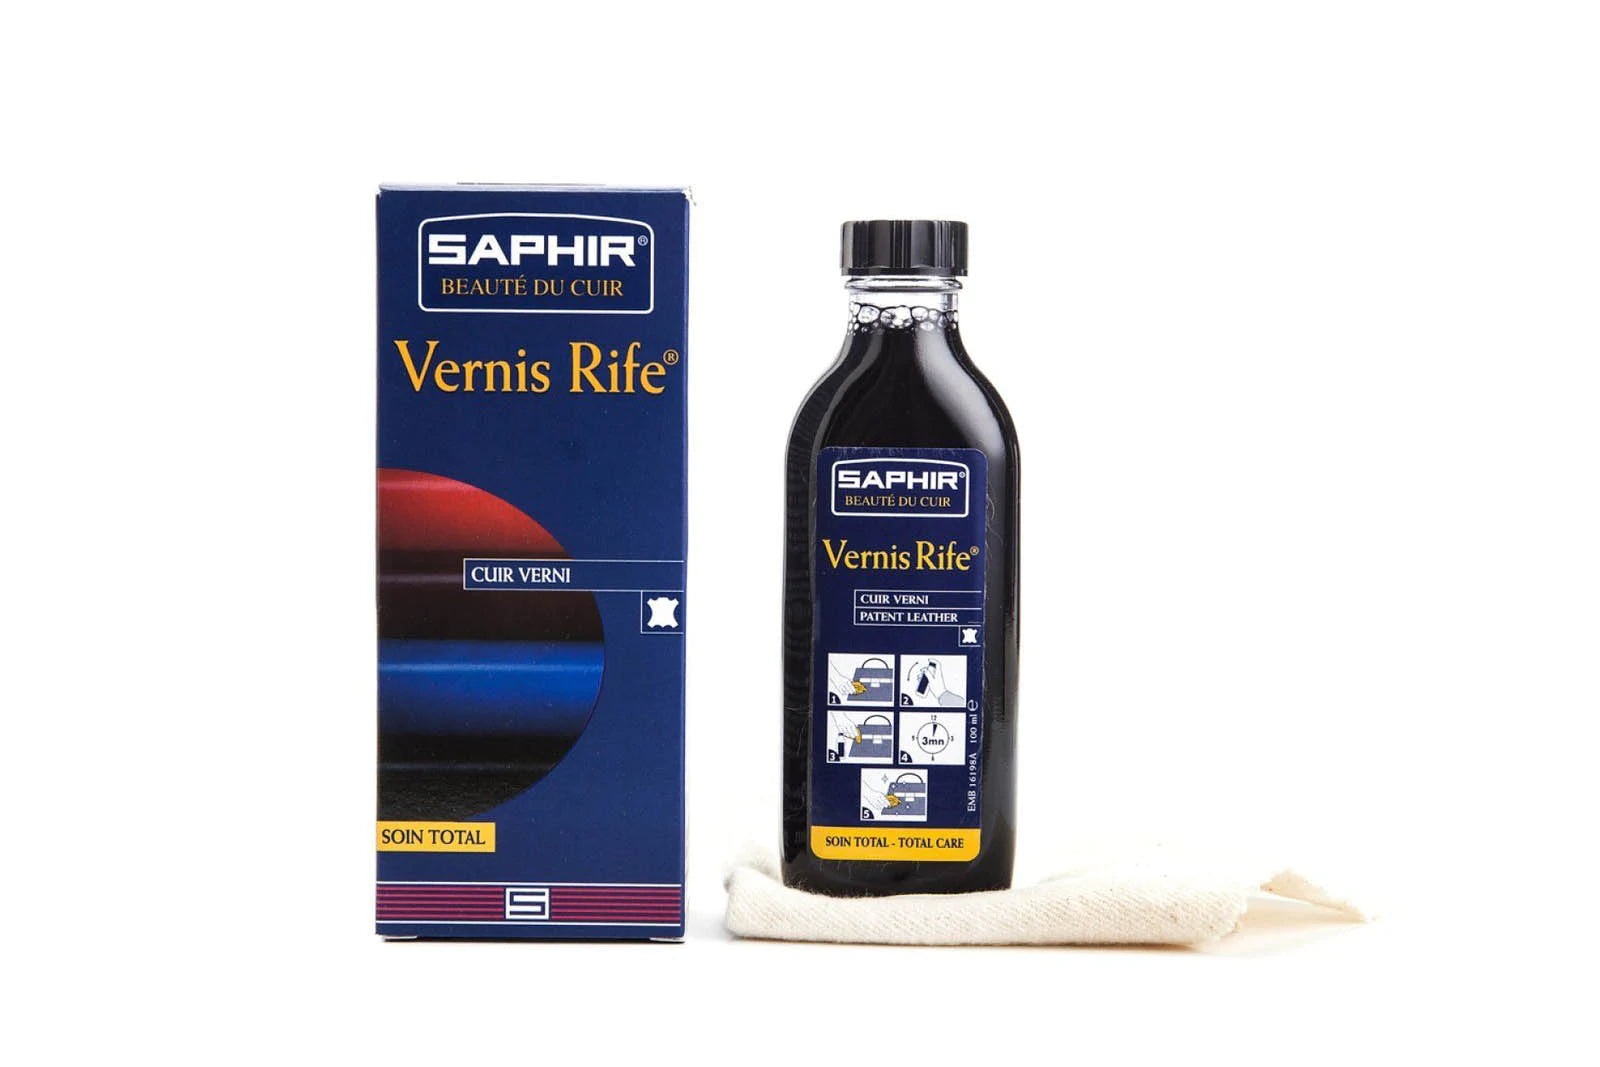 Saphir Vernis Rife Patent Leather Cleaner & Conditioner (100 ml)